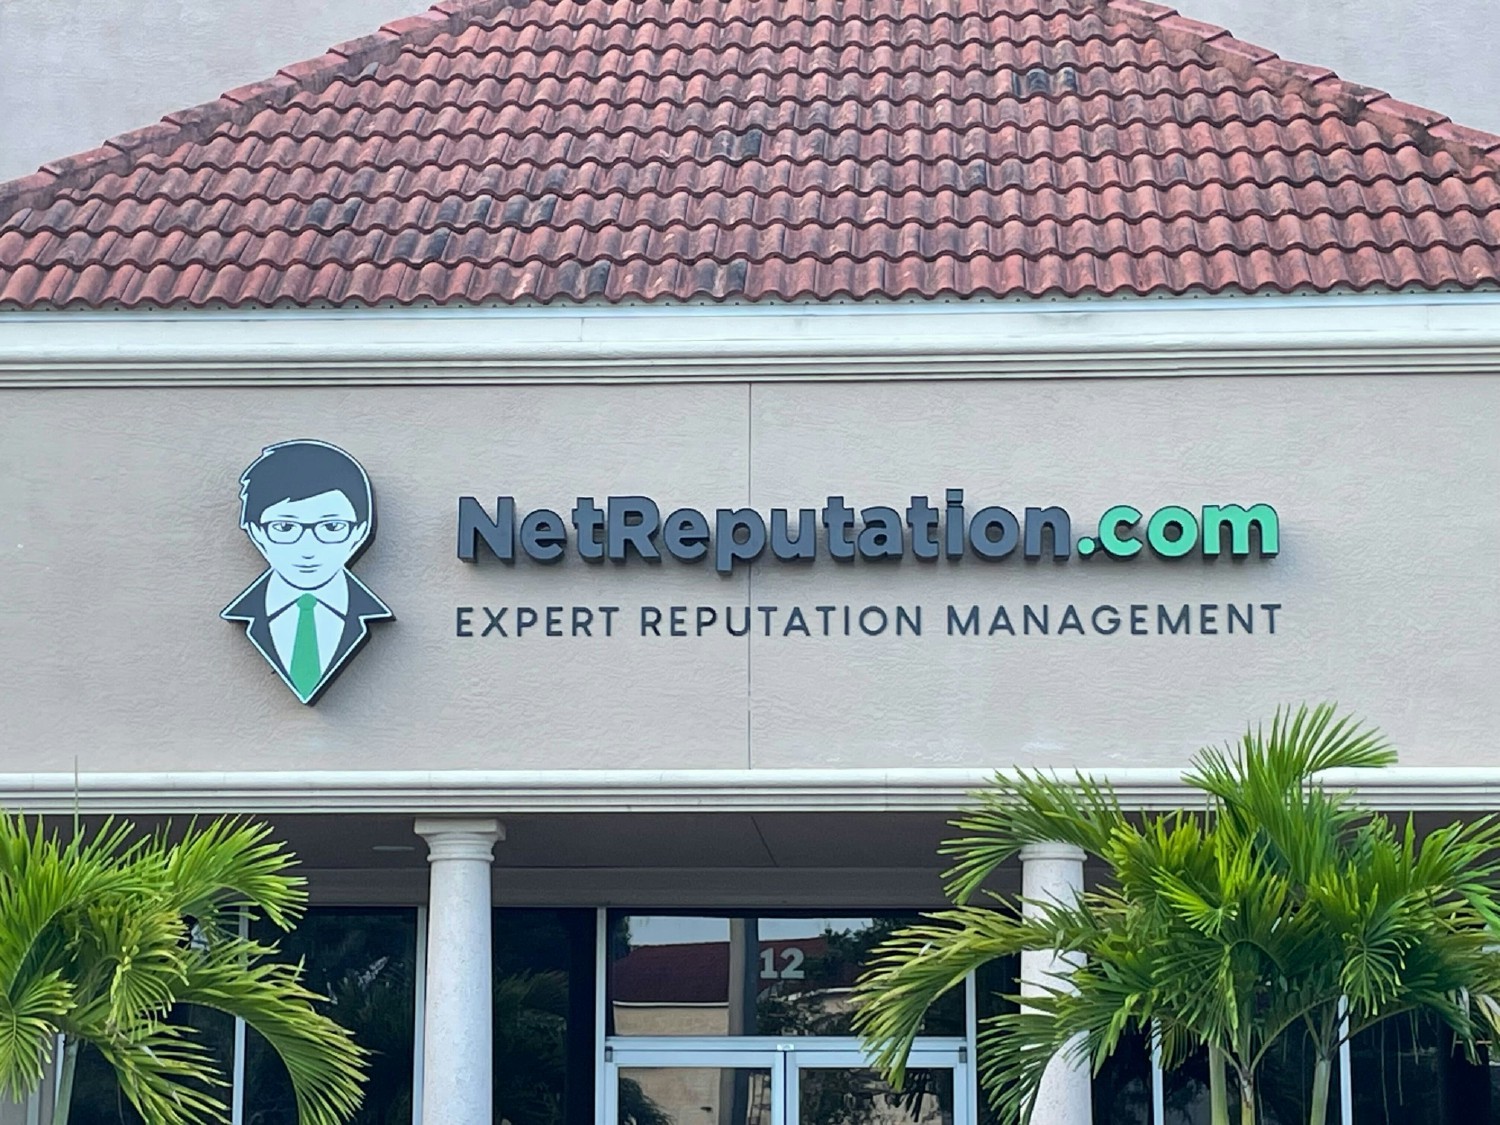 NetReputation.com headquarters is located in Sarasota, Florida.